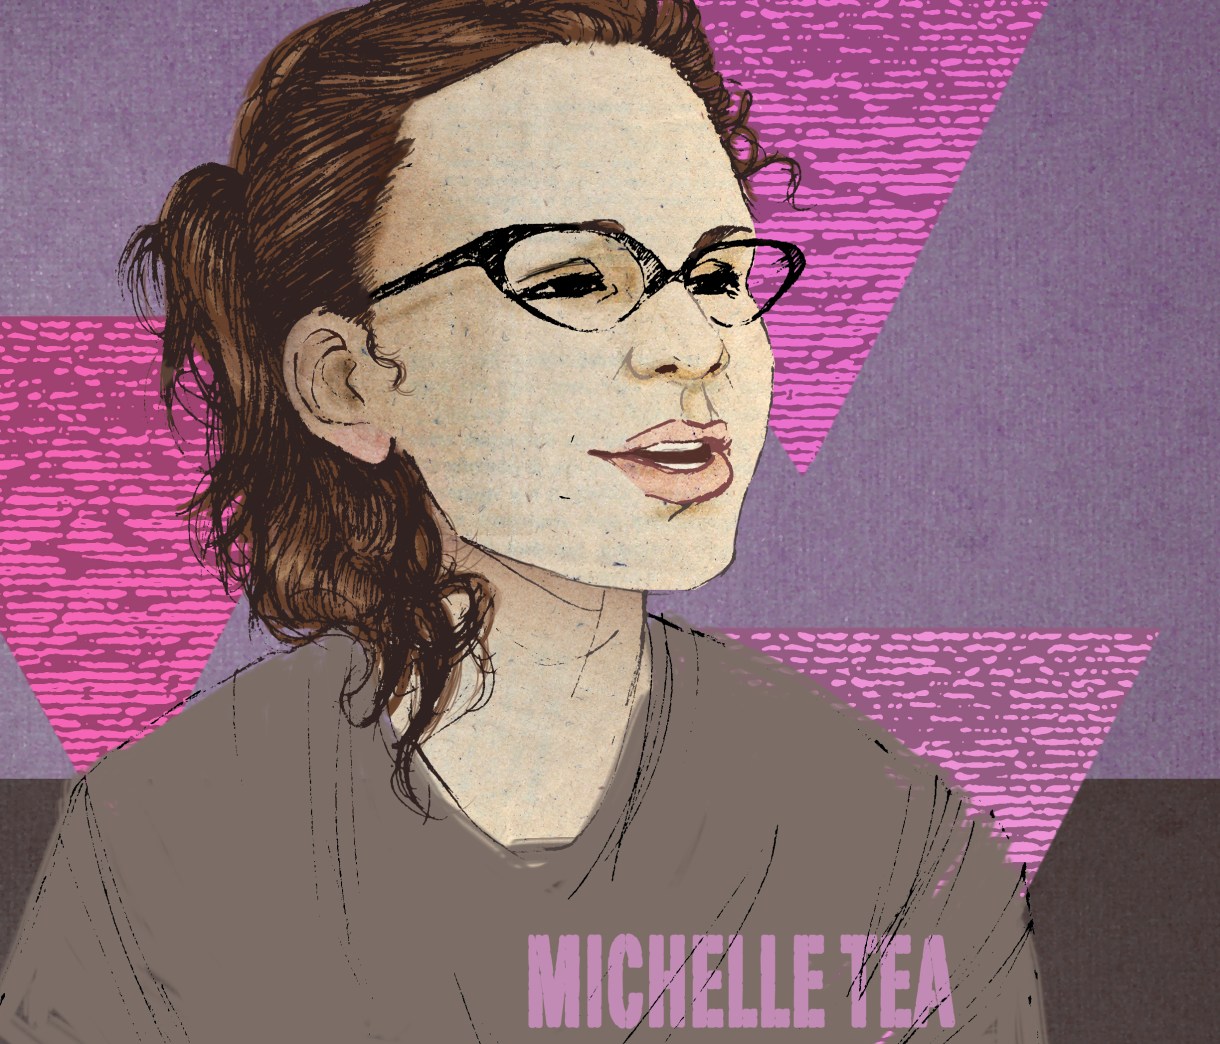 Michelle Tea by mishka colombo